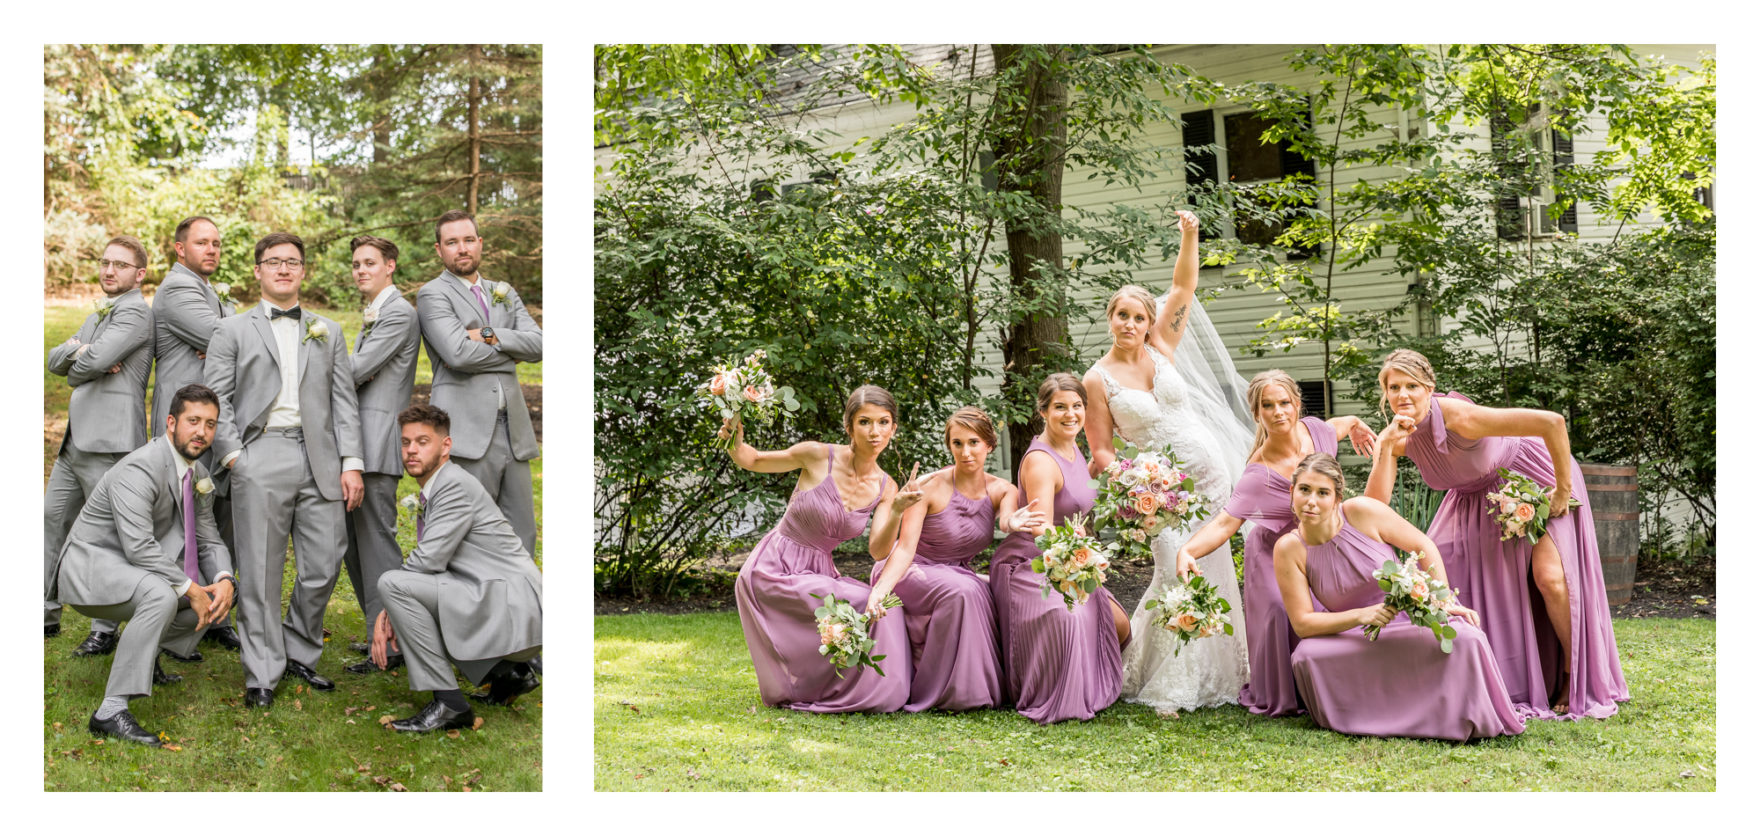 Summer wedding. Seasons at Magnolia Manor. 2020 Wedding. Covid wedding. Purple wedding. Ukulele. Outdoor reception. Bistro lights reception. 